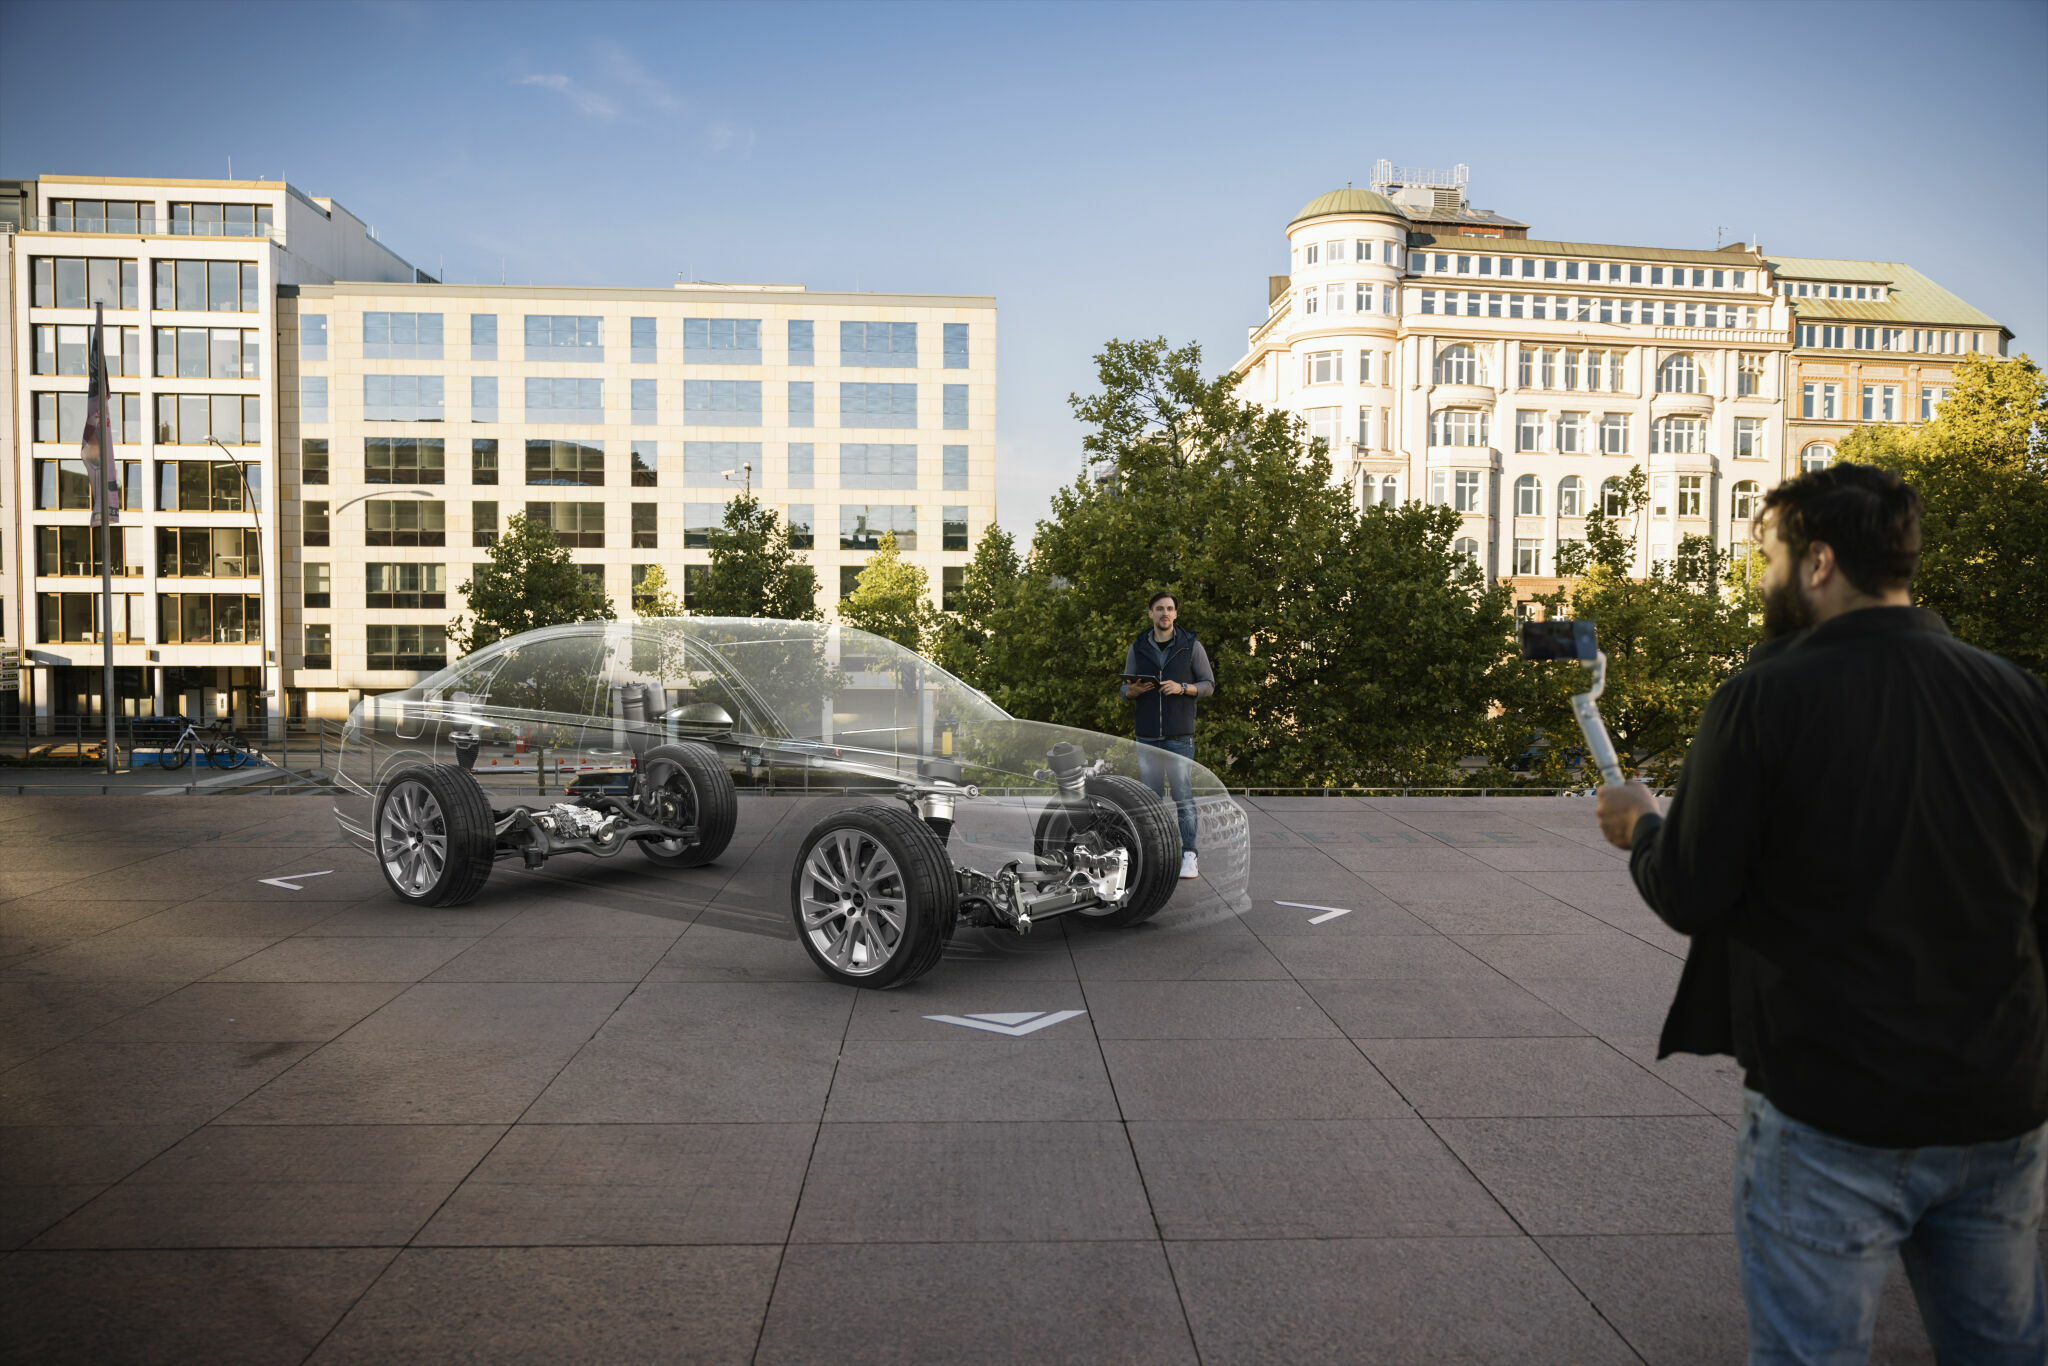 Virtuelles Exponat im Audi Forum Neckarsulm